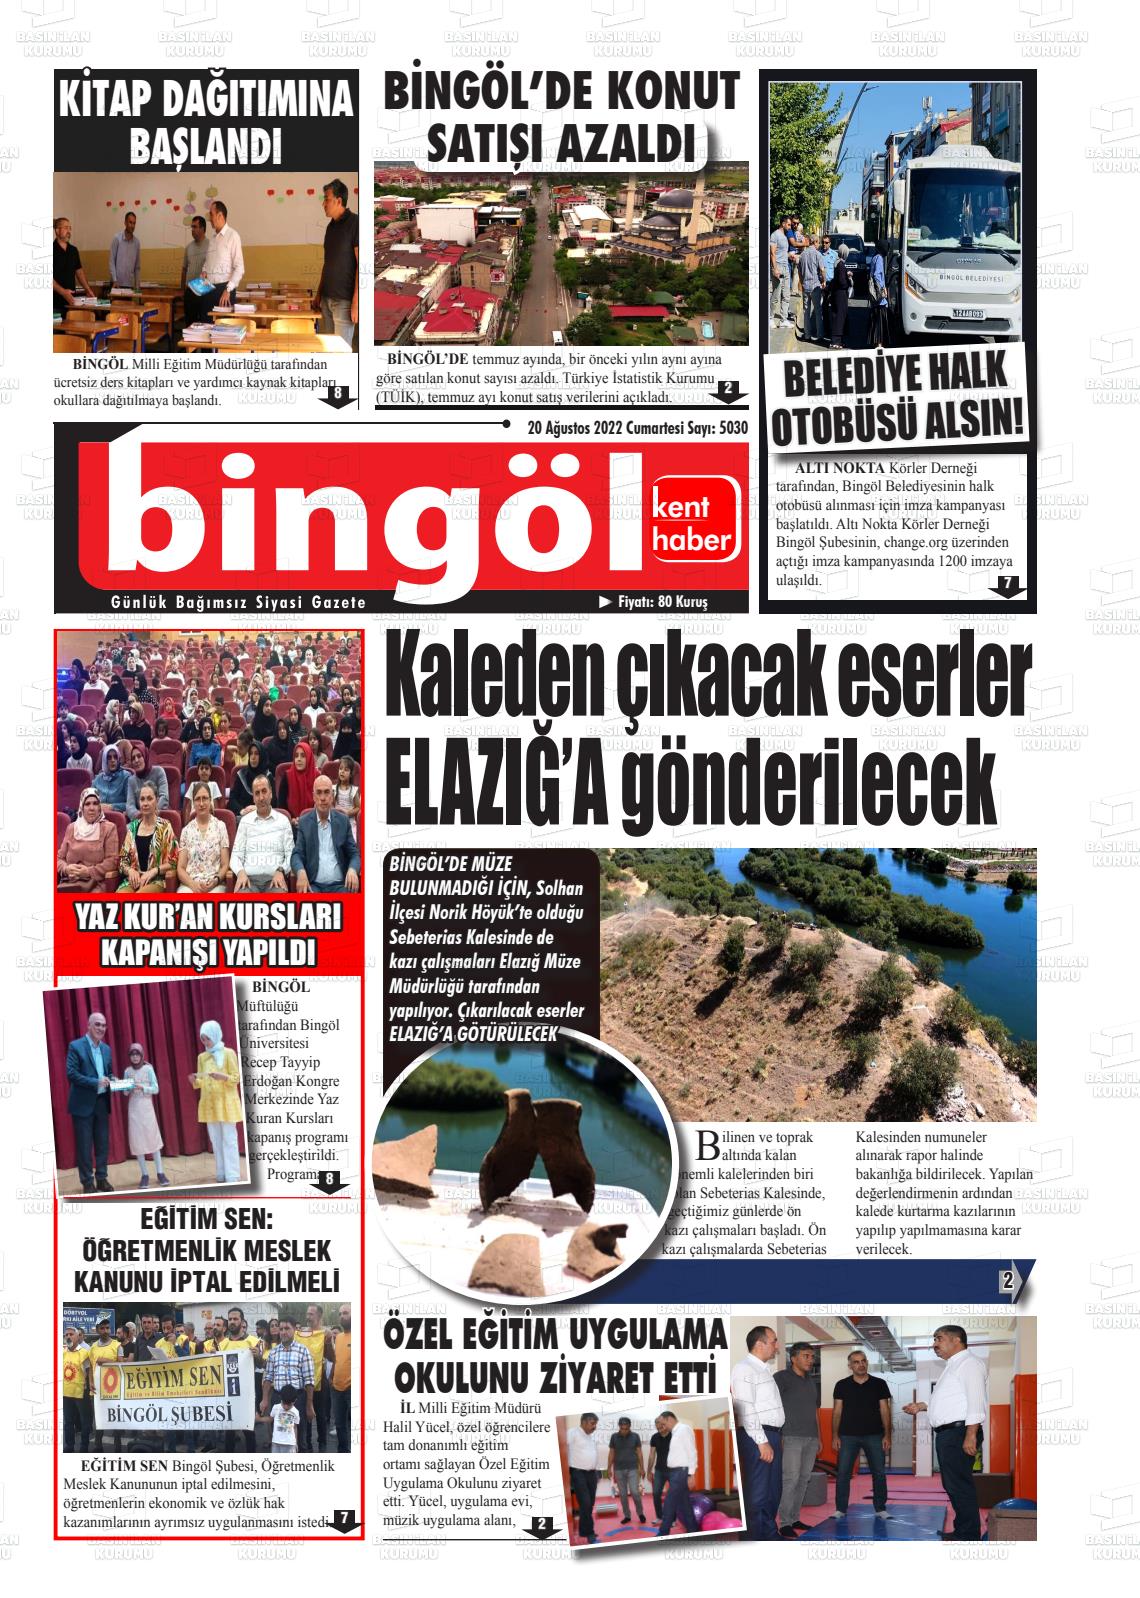 20 Ağustos 2022 Bingöl Kent Haber Gazete Manşeti